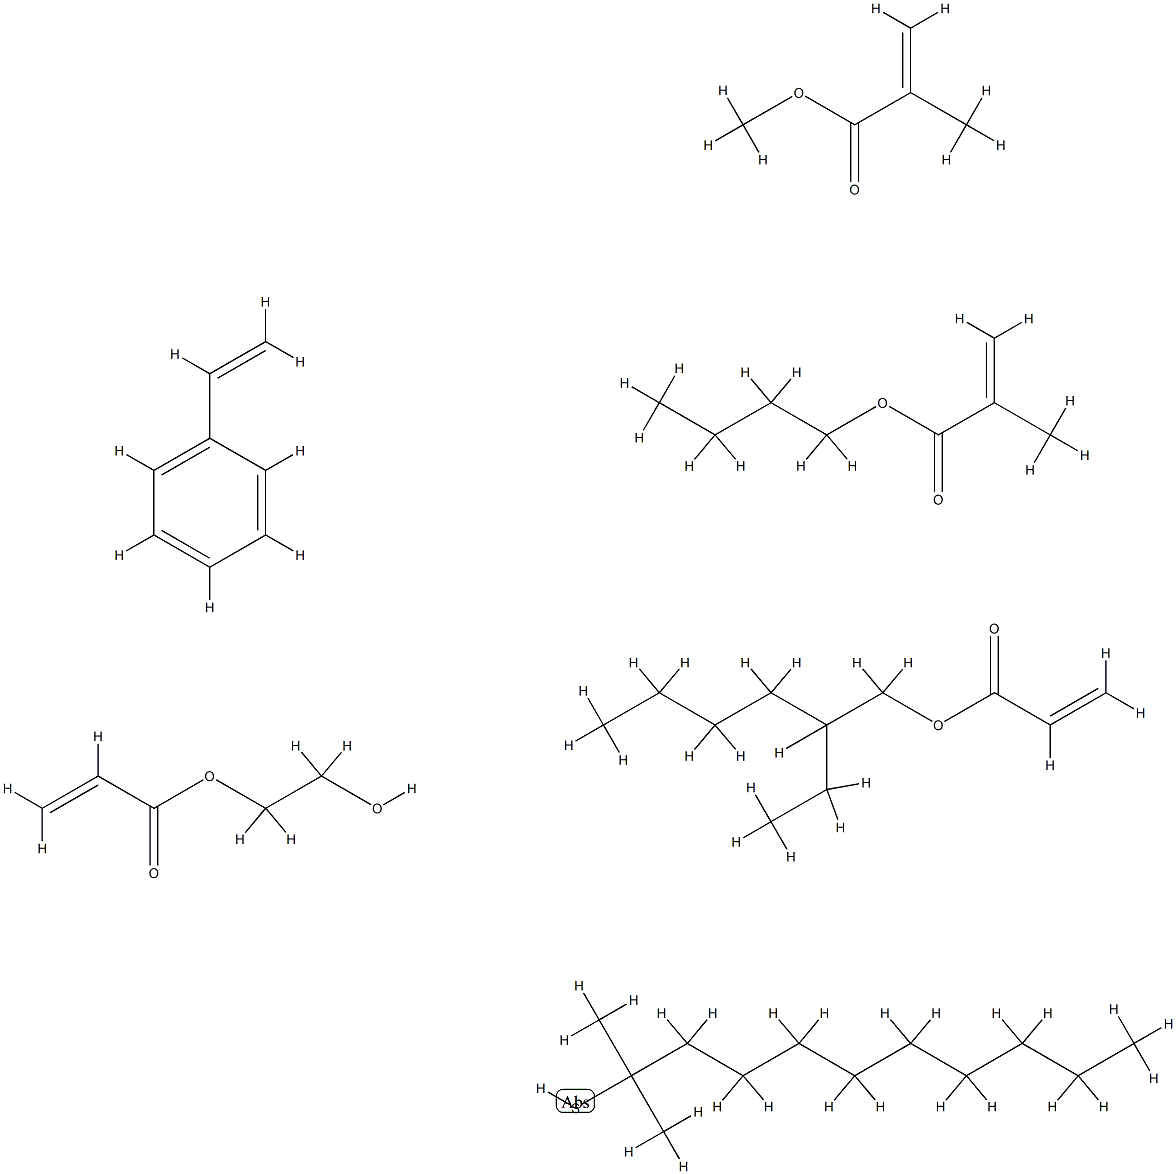 2-Propenoic acid, 2-methyl-, butyl ester, telomer with tert-dodecanethiol, ethenylbenzene, 2-ethylhexyl 2-propenoate, 2-hydroxyethyl 2-propenoate and methyl 2-methyl-2-propenoate|